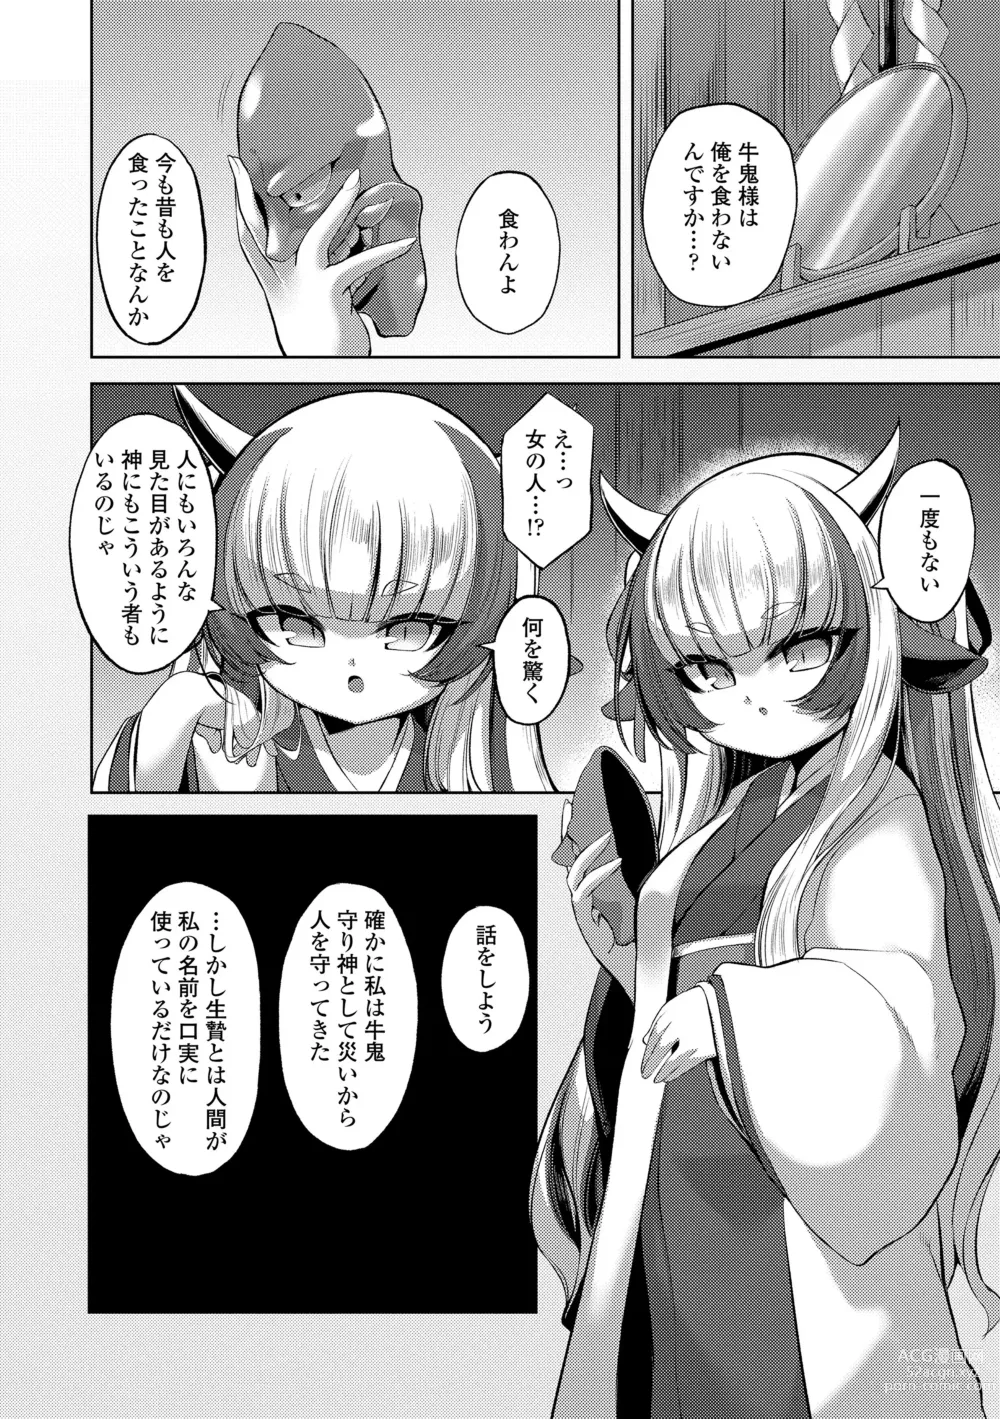 Page 6 of manga Hitoyo Hitoyo Ouse no Mamani